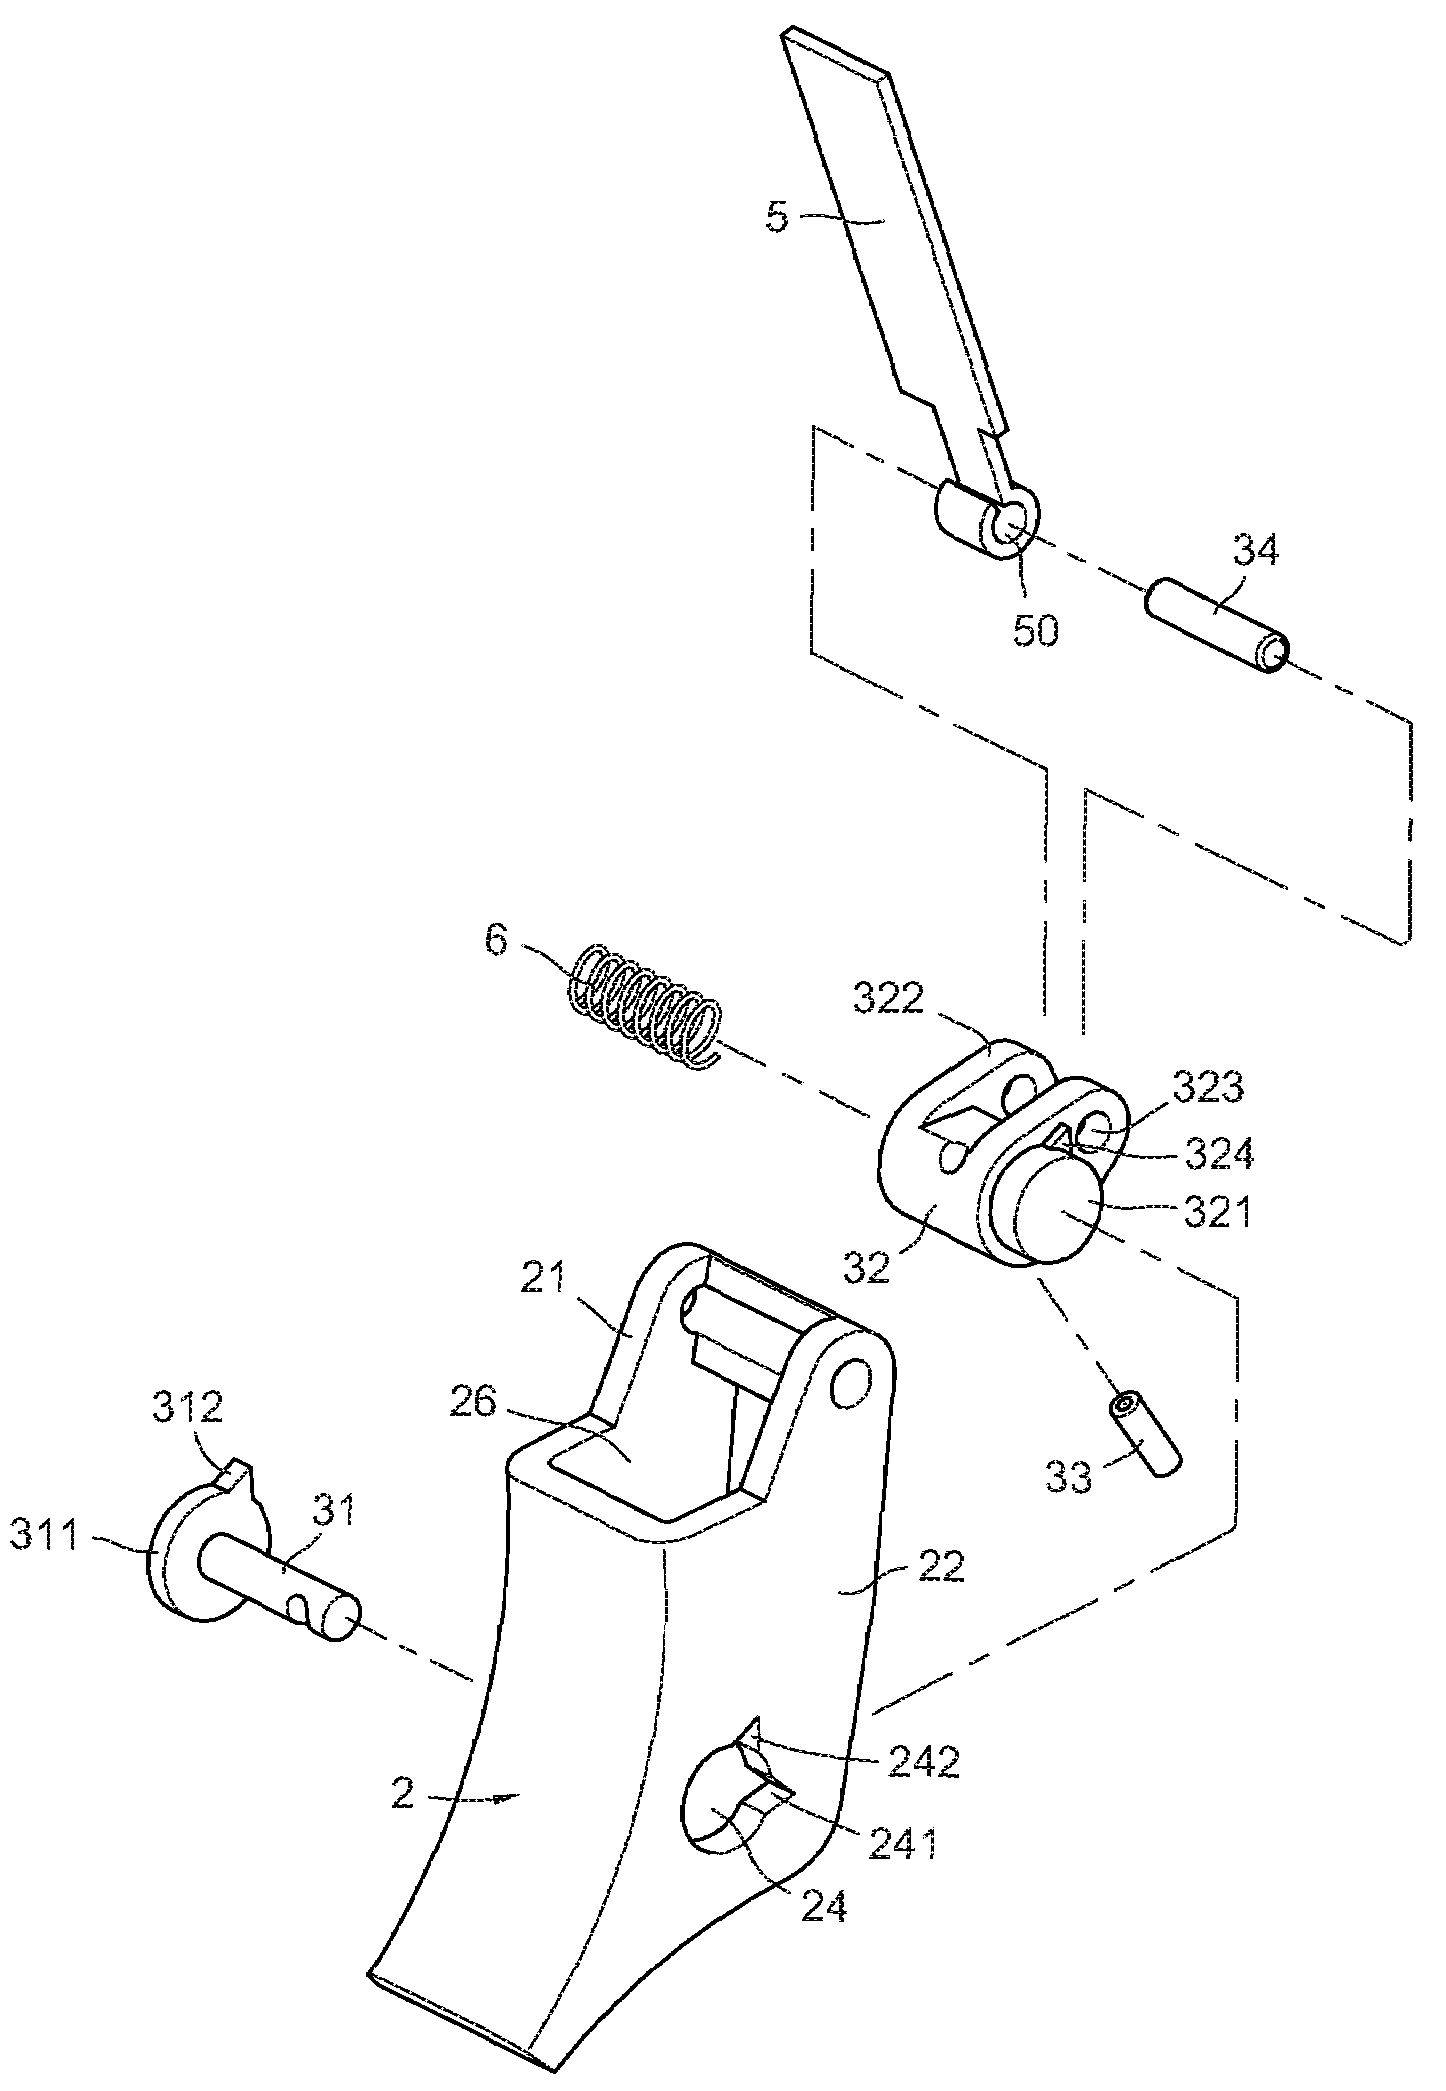 Trigger Switch Mechanism of Nail Gun